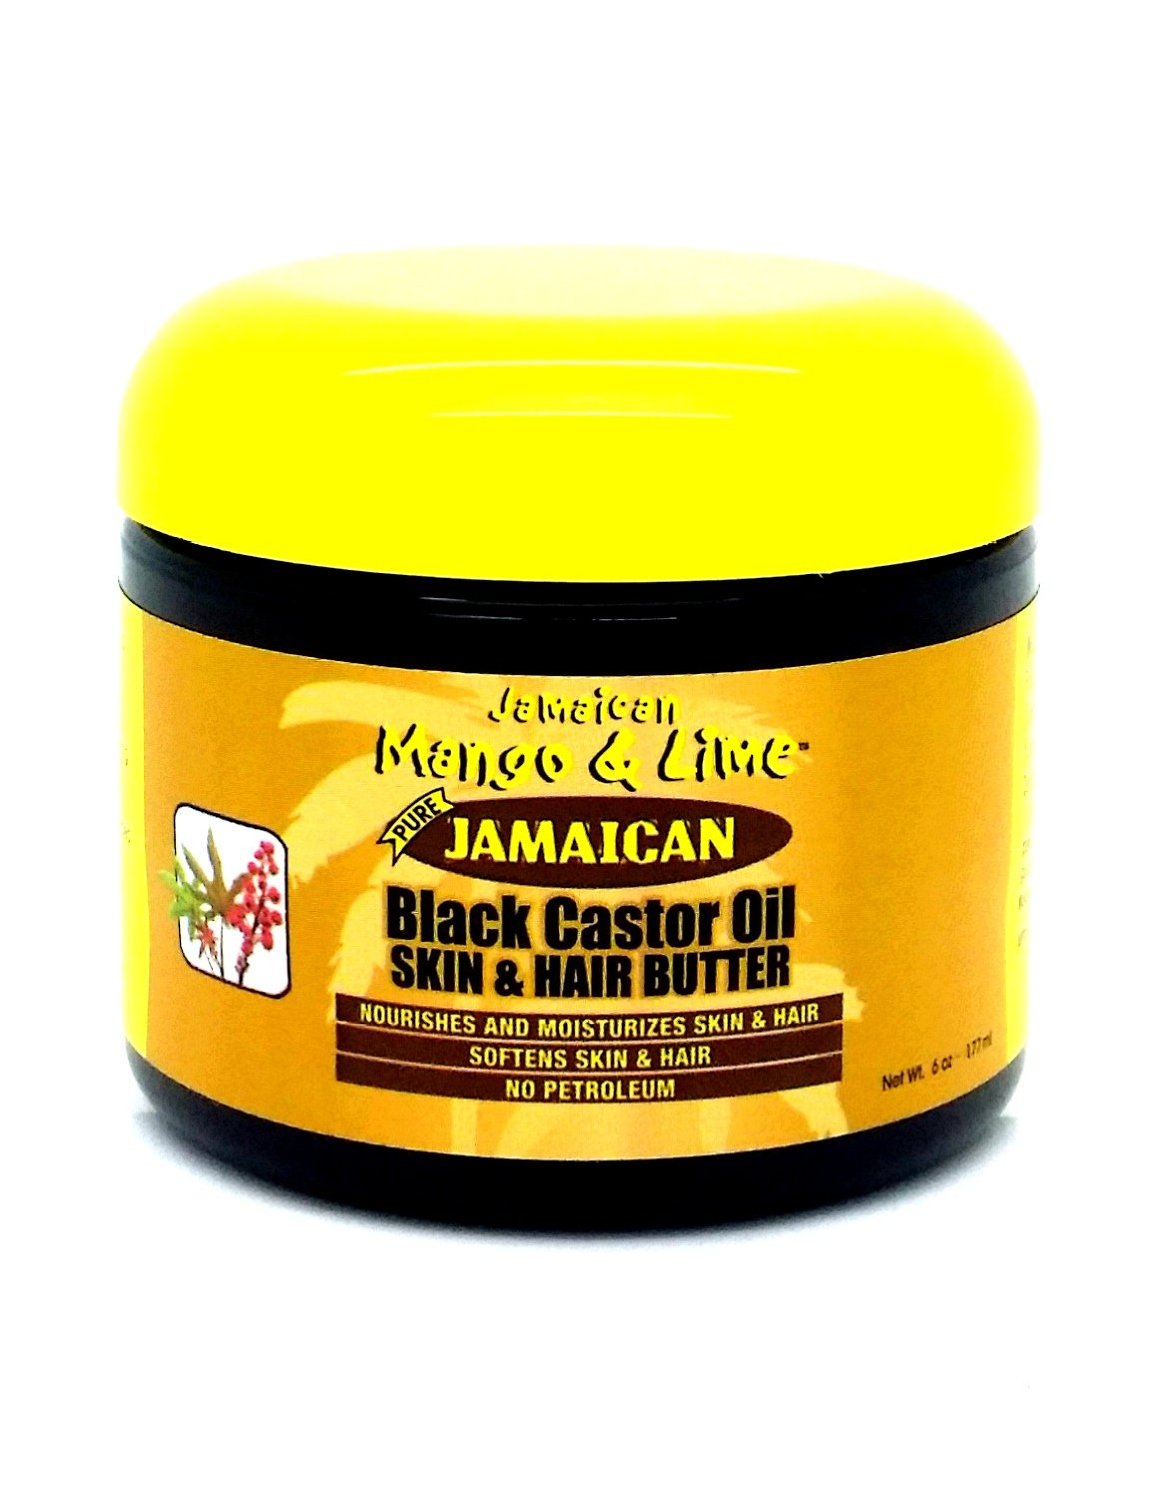 JAMAICAN MANGO & LIME BLACK CASTOR OIL HAIR BUTTER - 6OZ